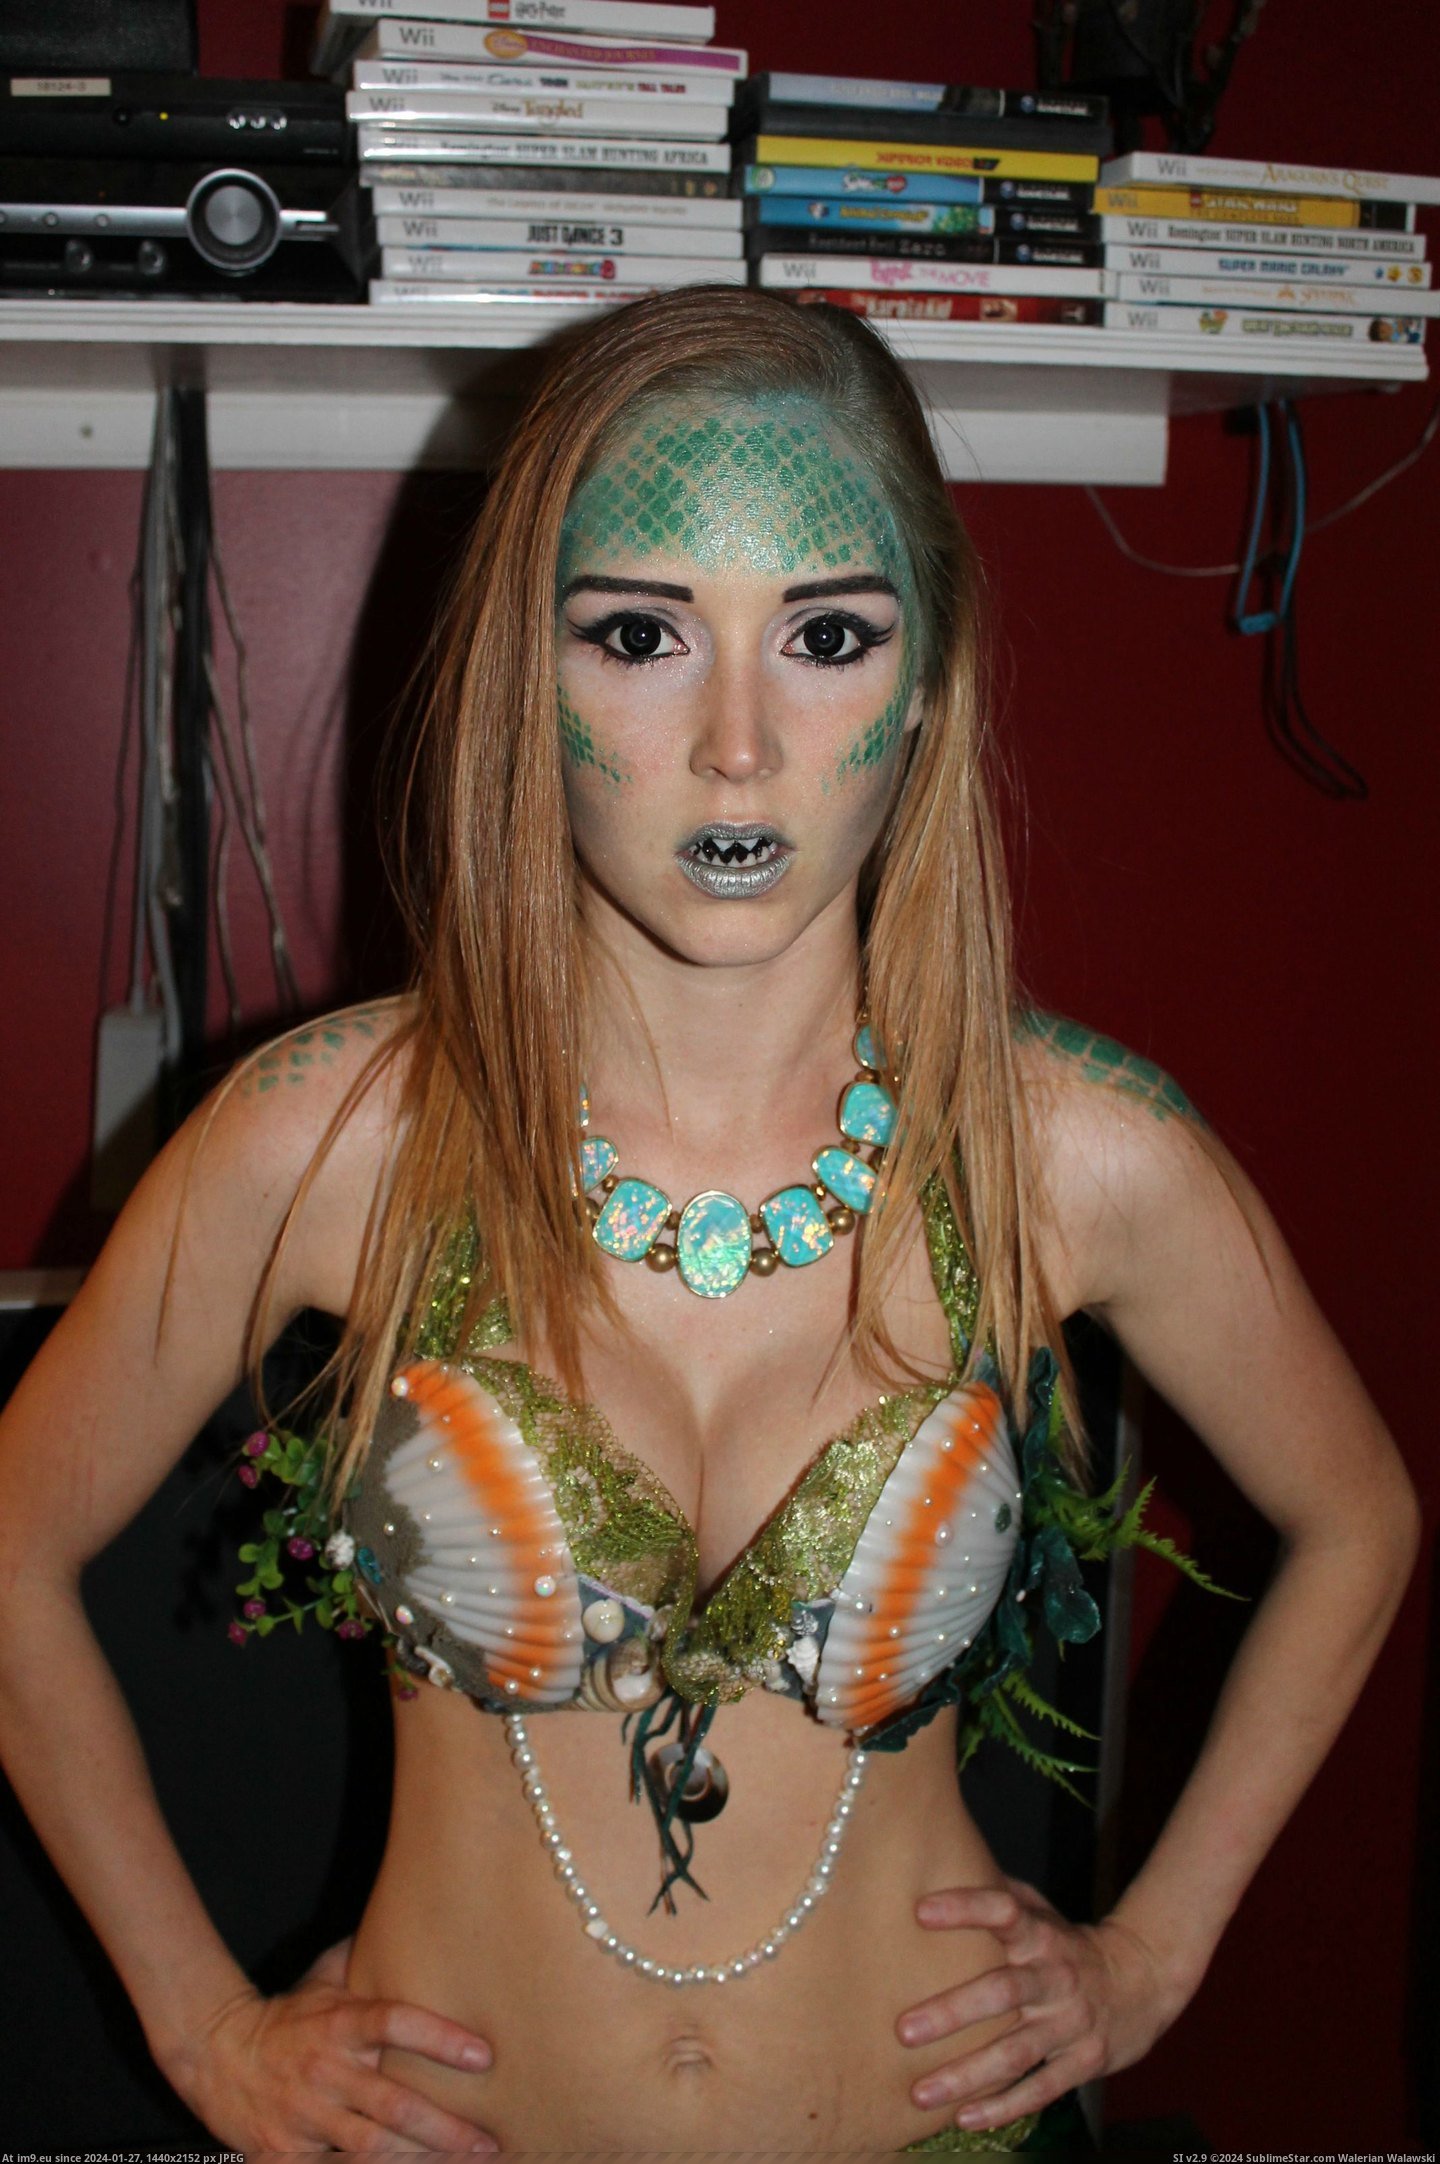 #Costume #Homemade #Mermaid [Pics] My homemade mermaid costume! 4 Pic. (Изображение из альбом My r/PICS favs))